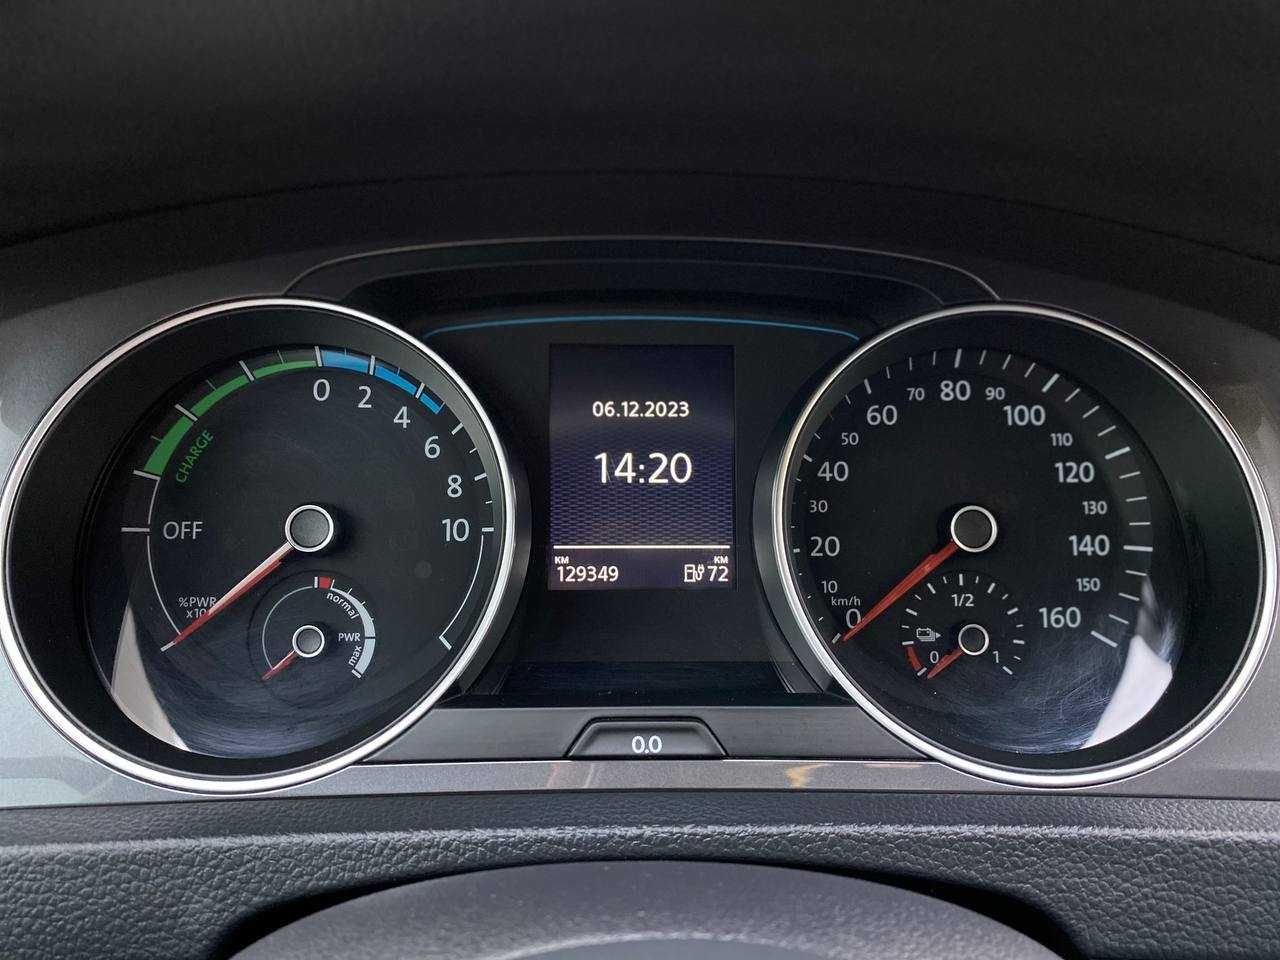 Авто Volkswagen e-Golf 2014р. 24кВт, електро, (перший внесок від 20%)